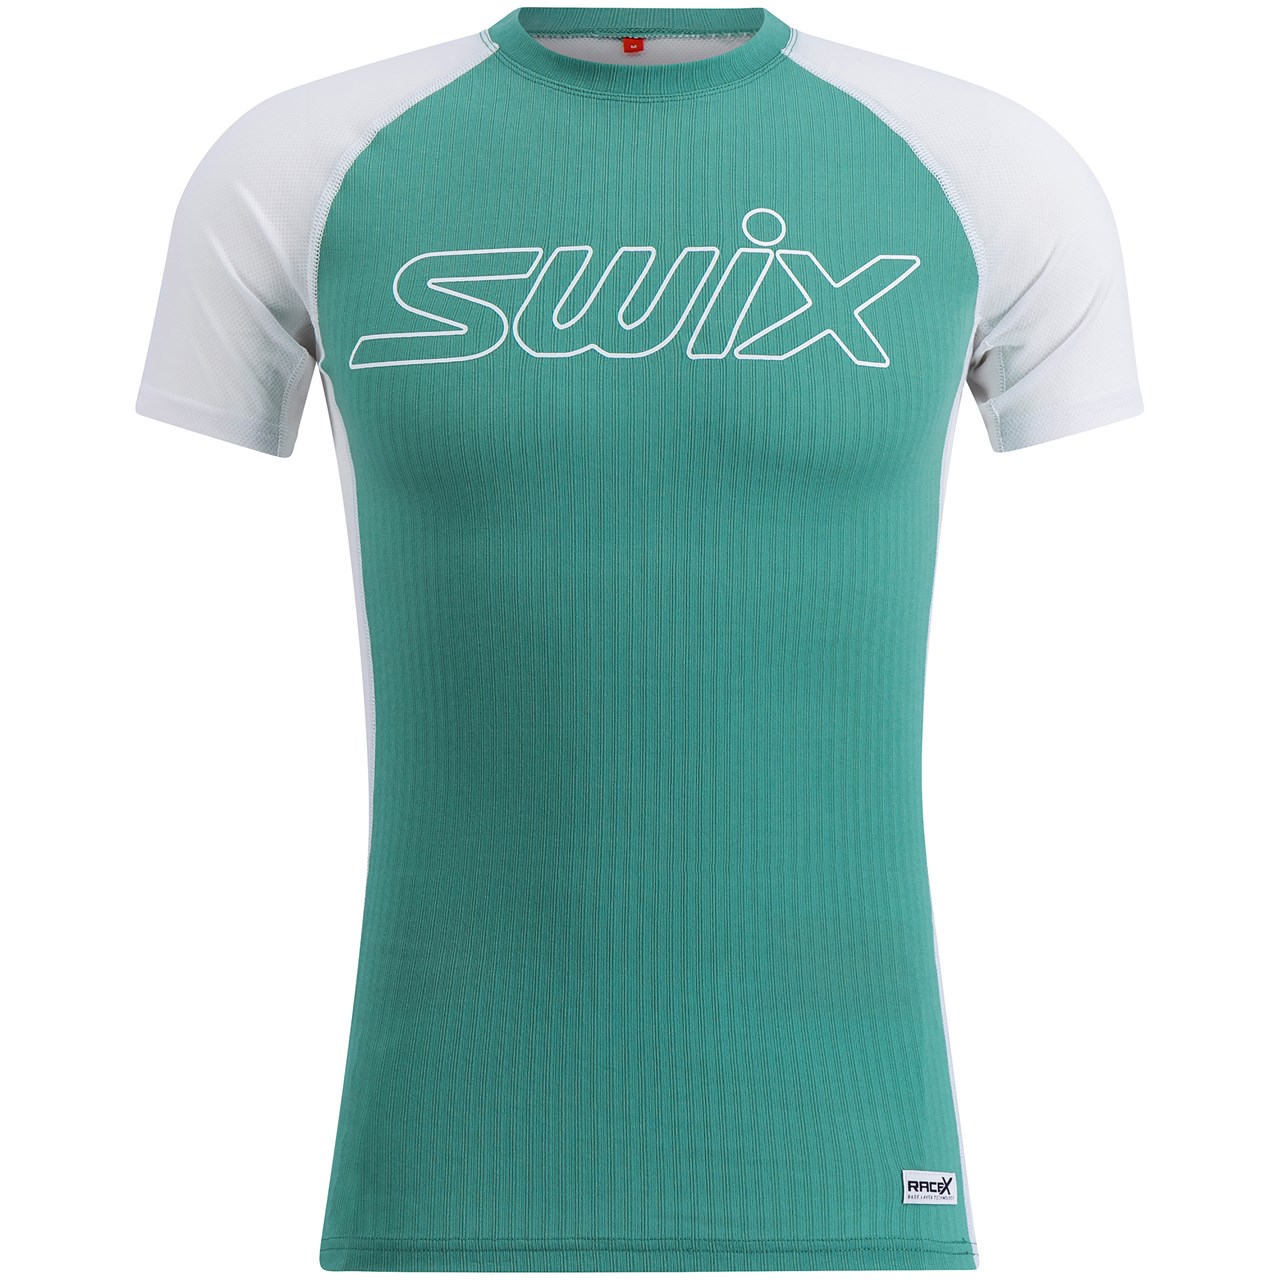 Swix, Racex Light Ss M, Avocado/Bright White, T-skjorte